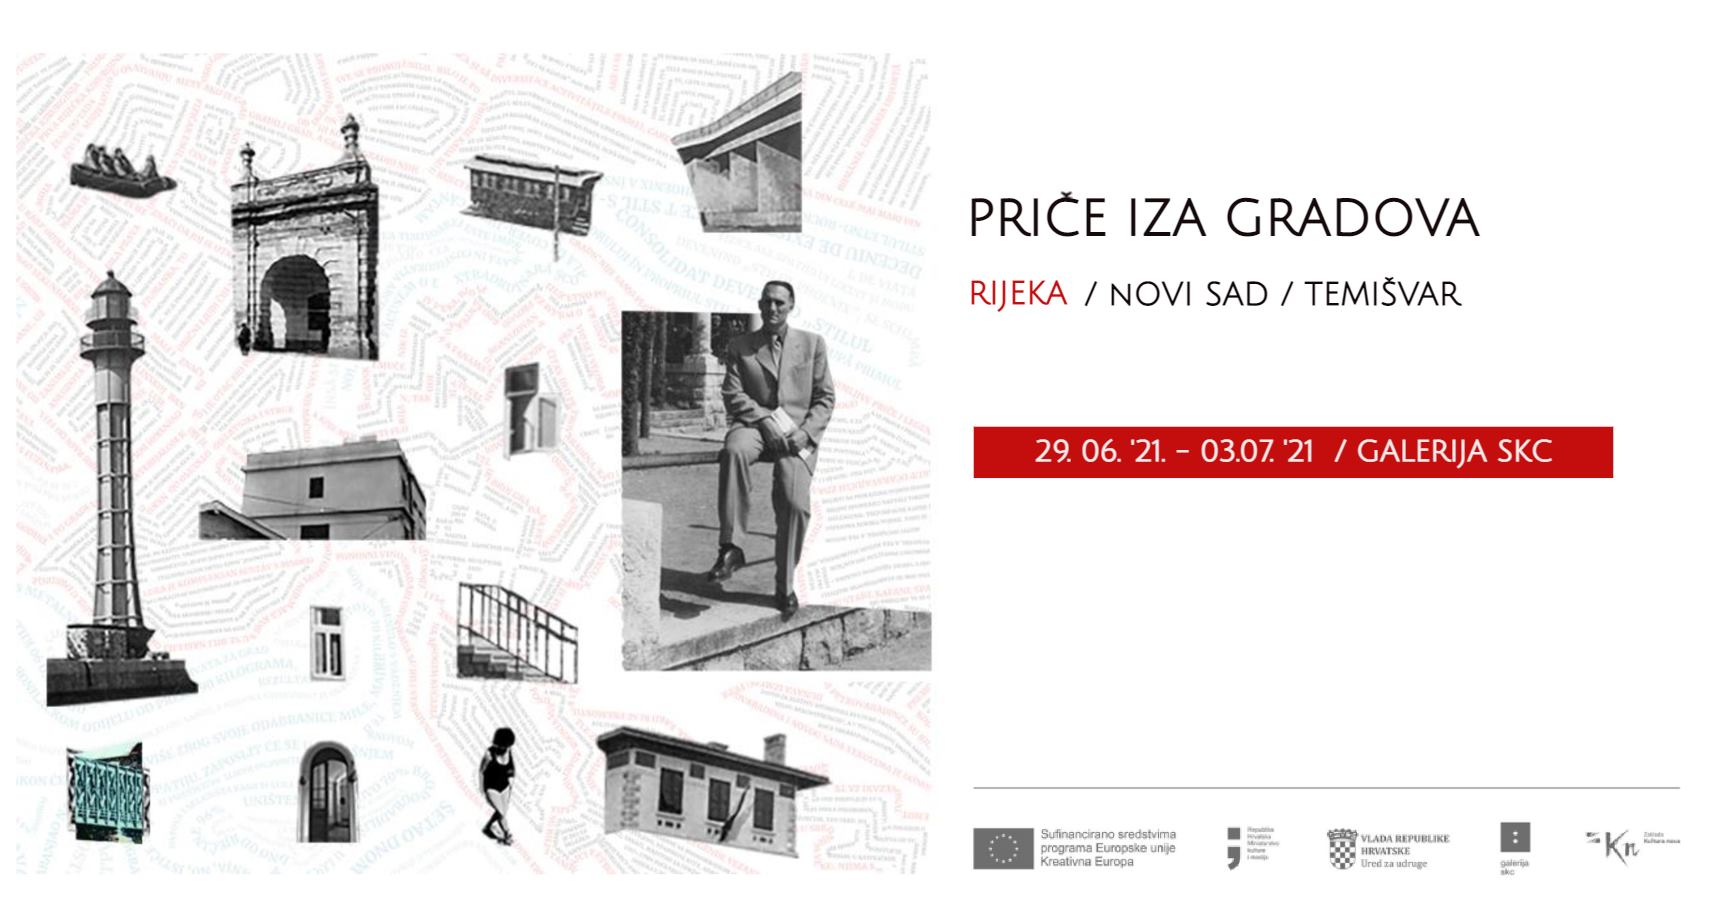 Stories behind cities: expoziție multimedia în Rijeka